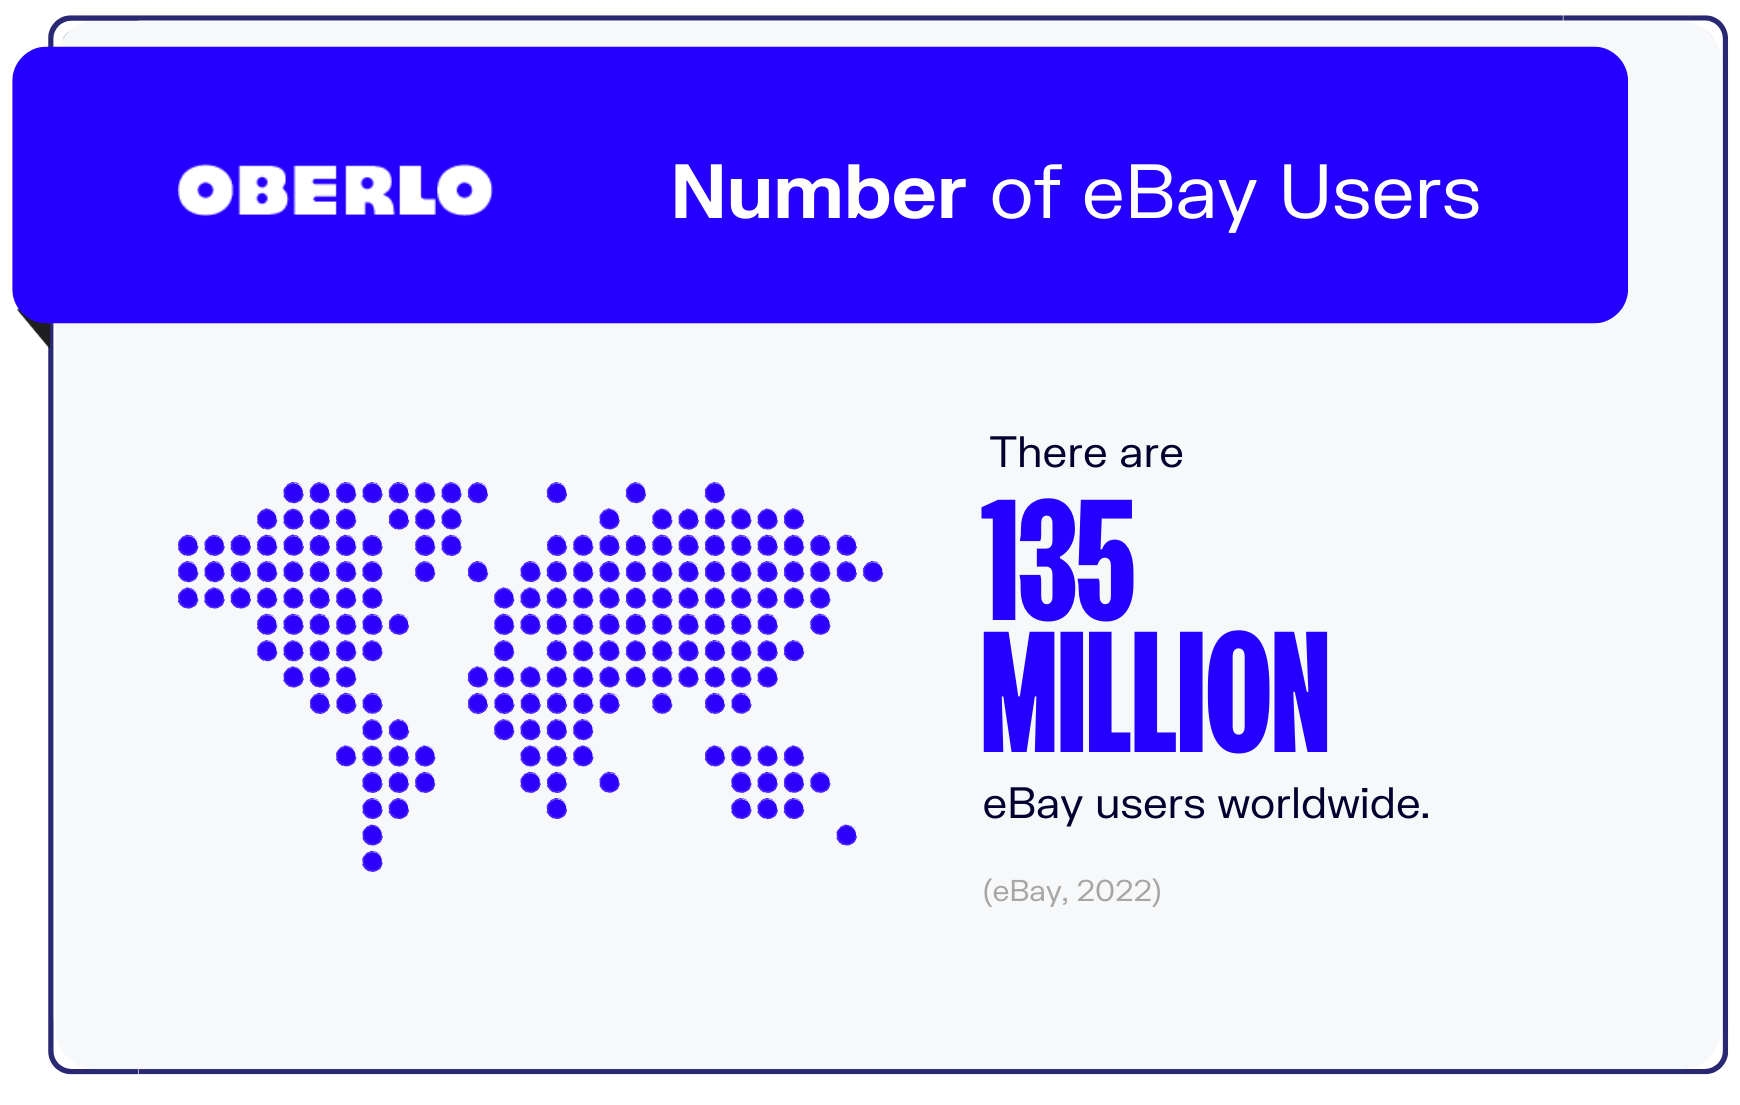 statistiques ebay graphique1